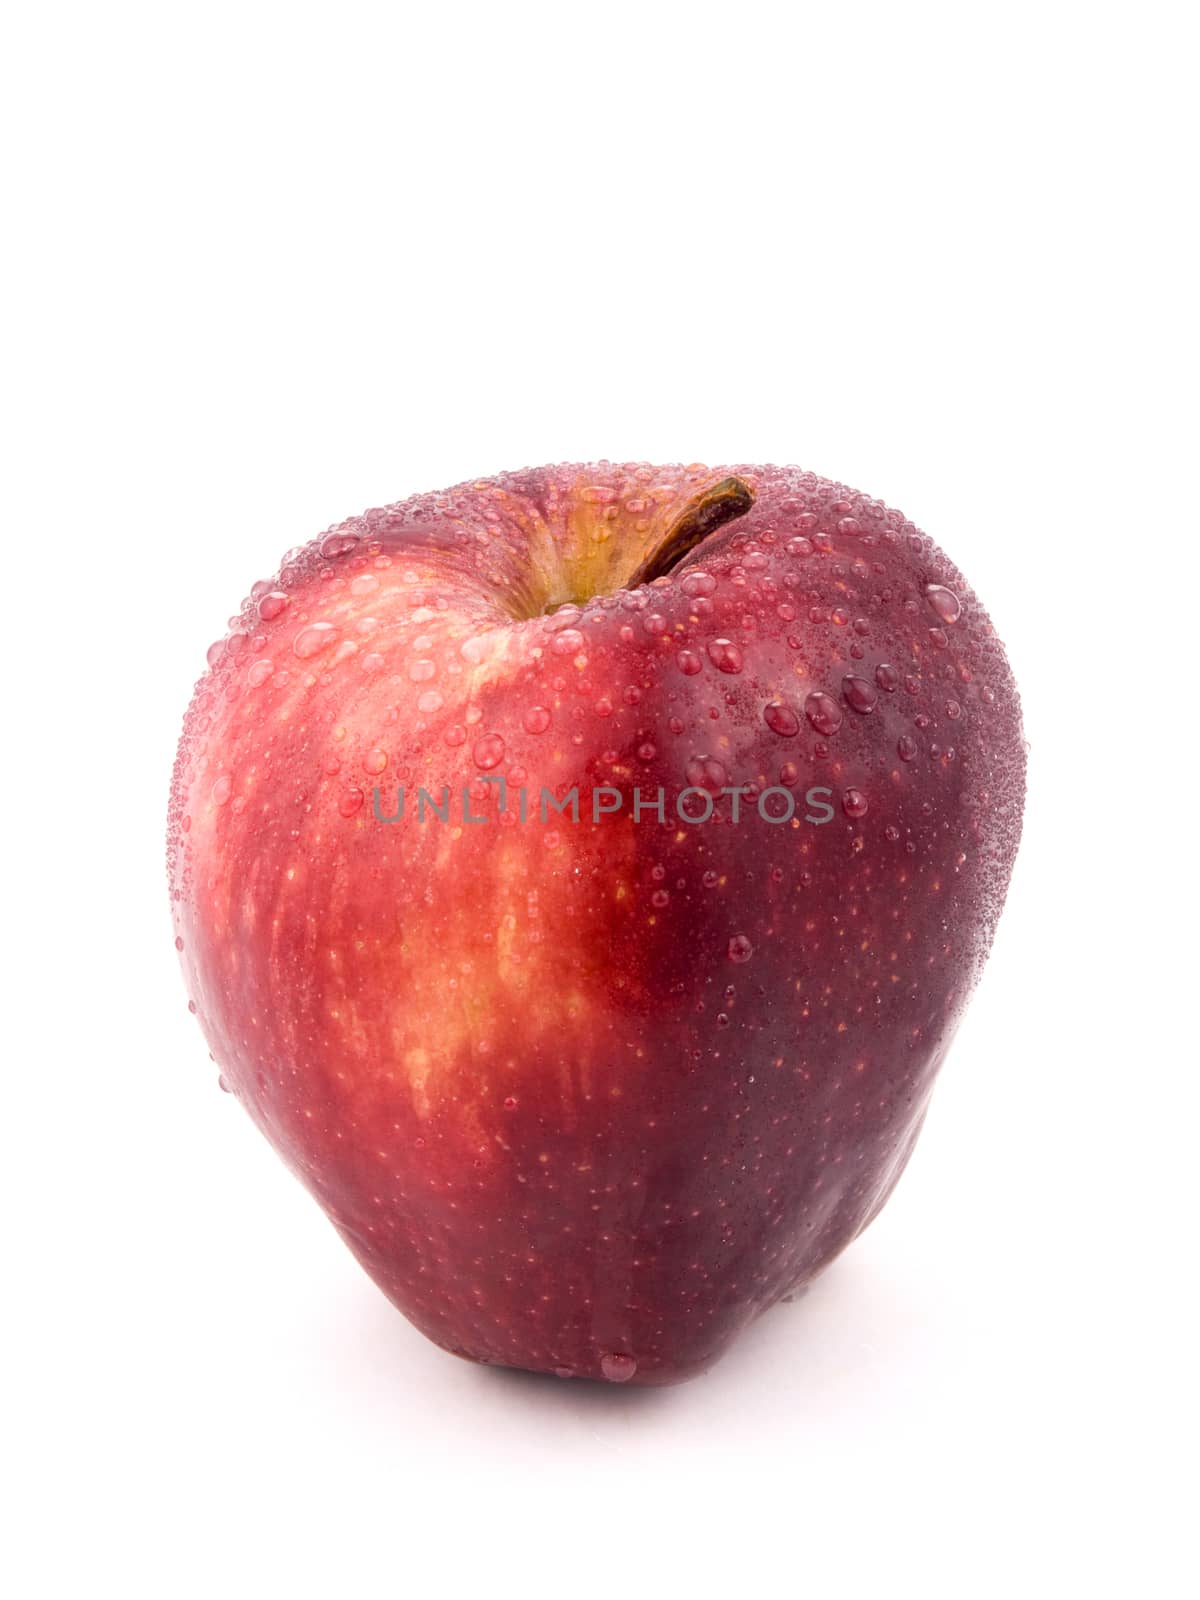 Tasty red apple on white background